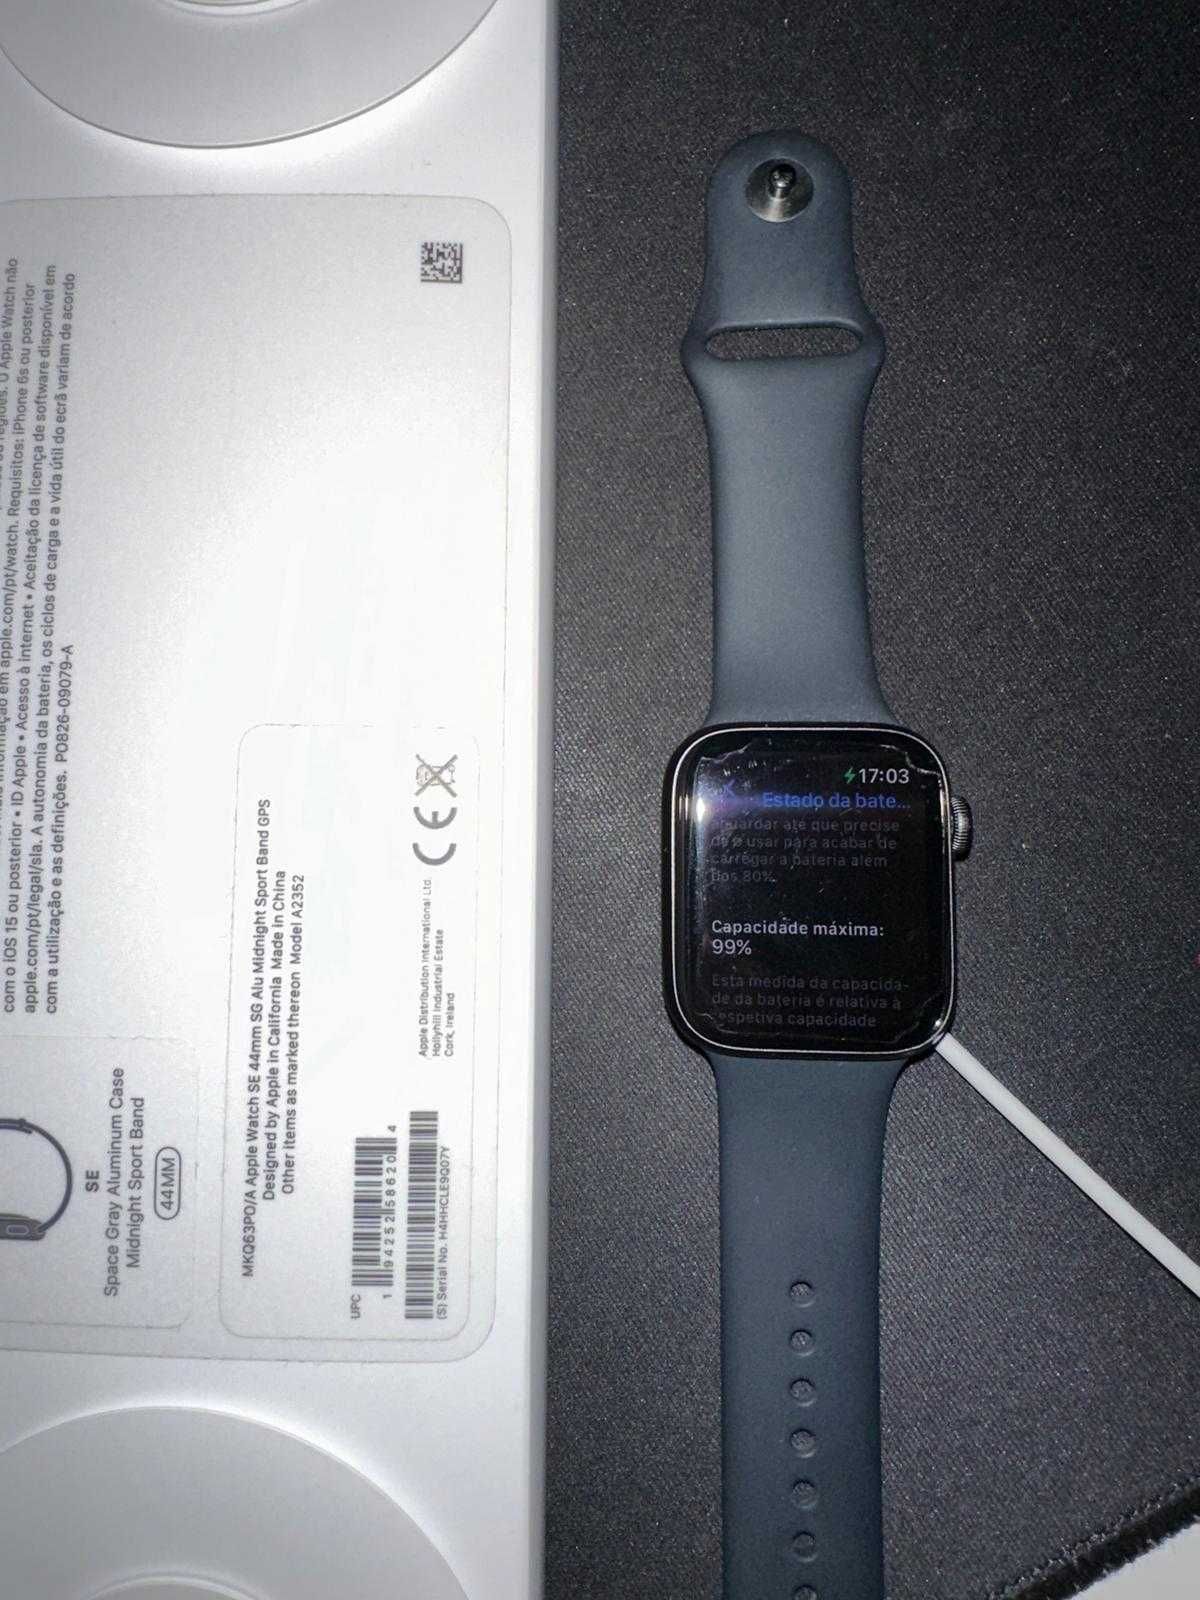 Apple Watch SE 2 44mm Midnight